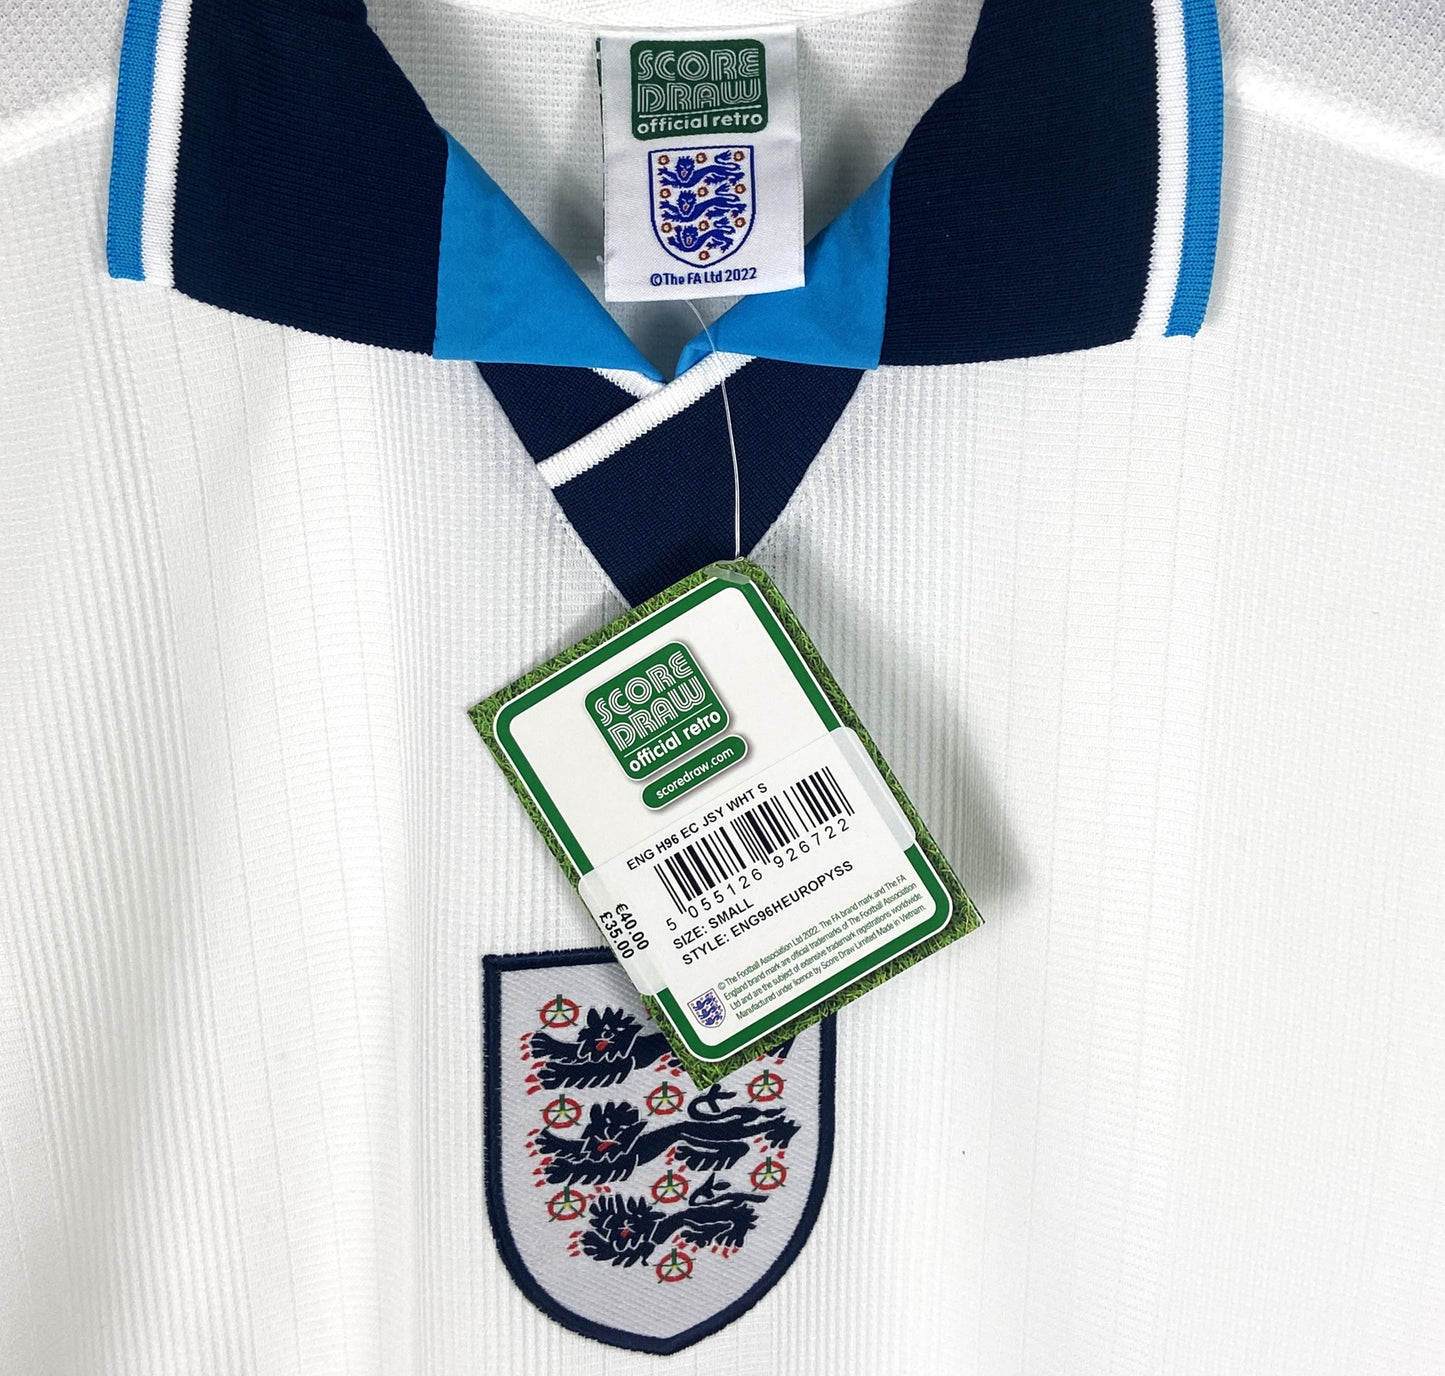 BNWT 1996 England Score Draw Home Football Shirt Men's Sizes